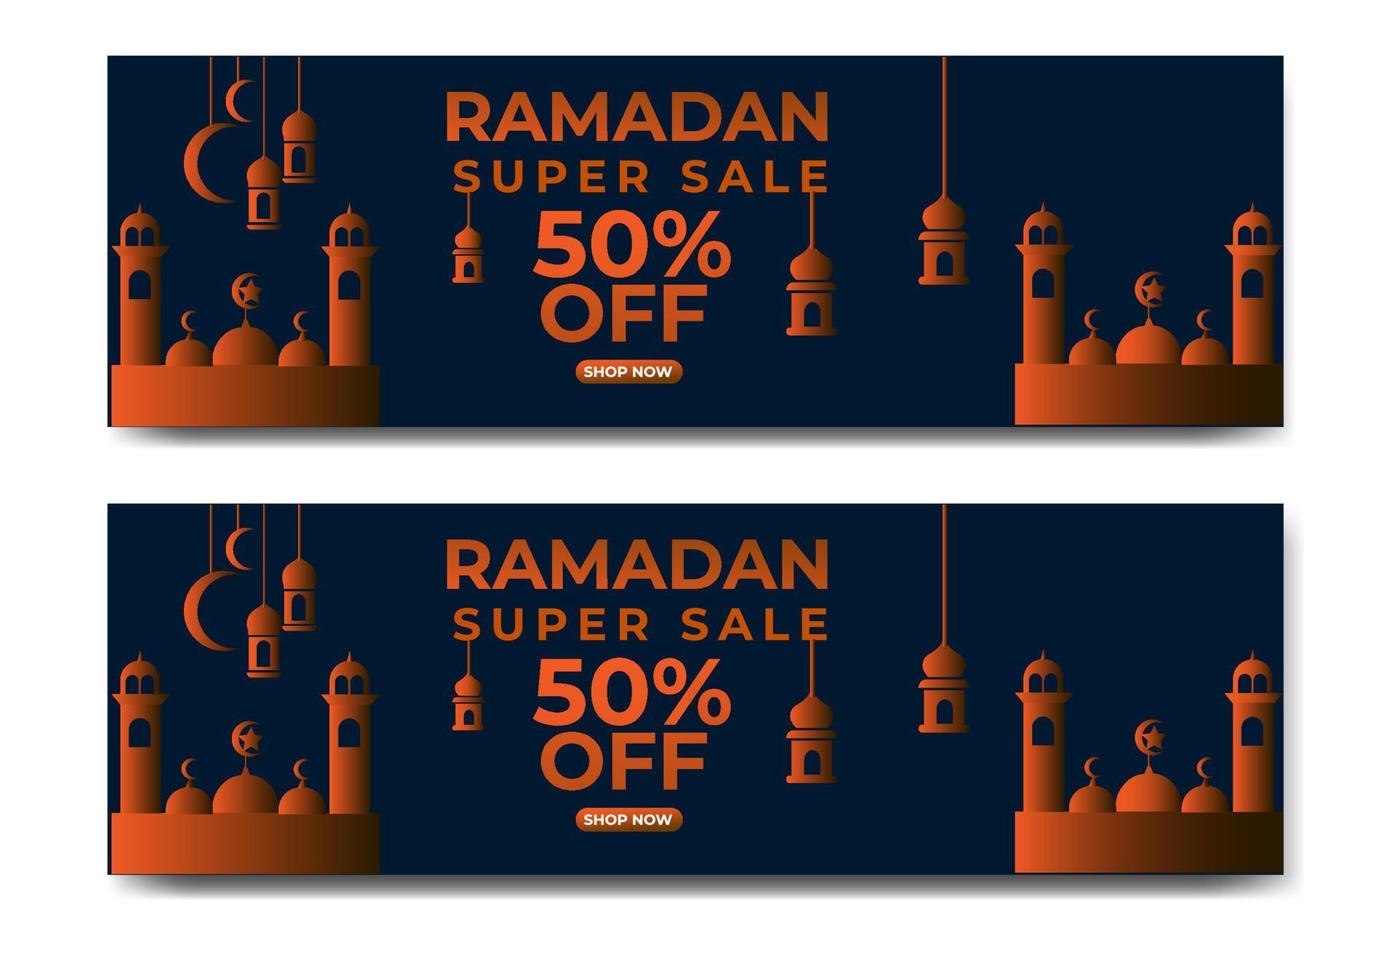 Ramadan Kareem set of posters or invitations.Vector illustration. Place for text.ramadan mubarak design vector